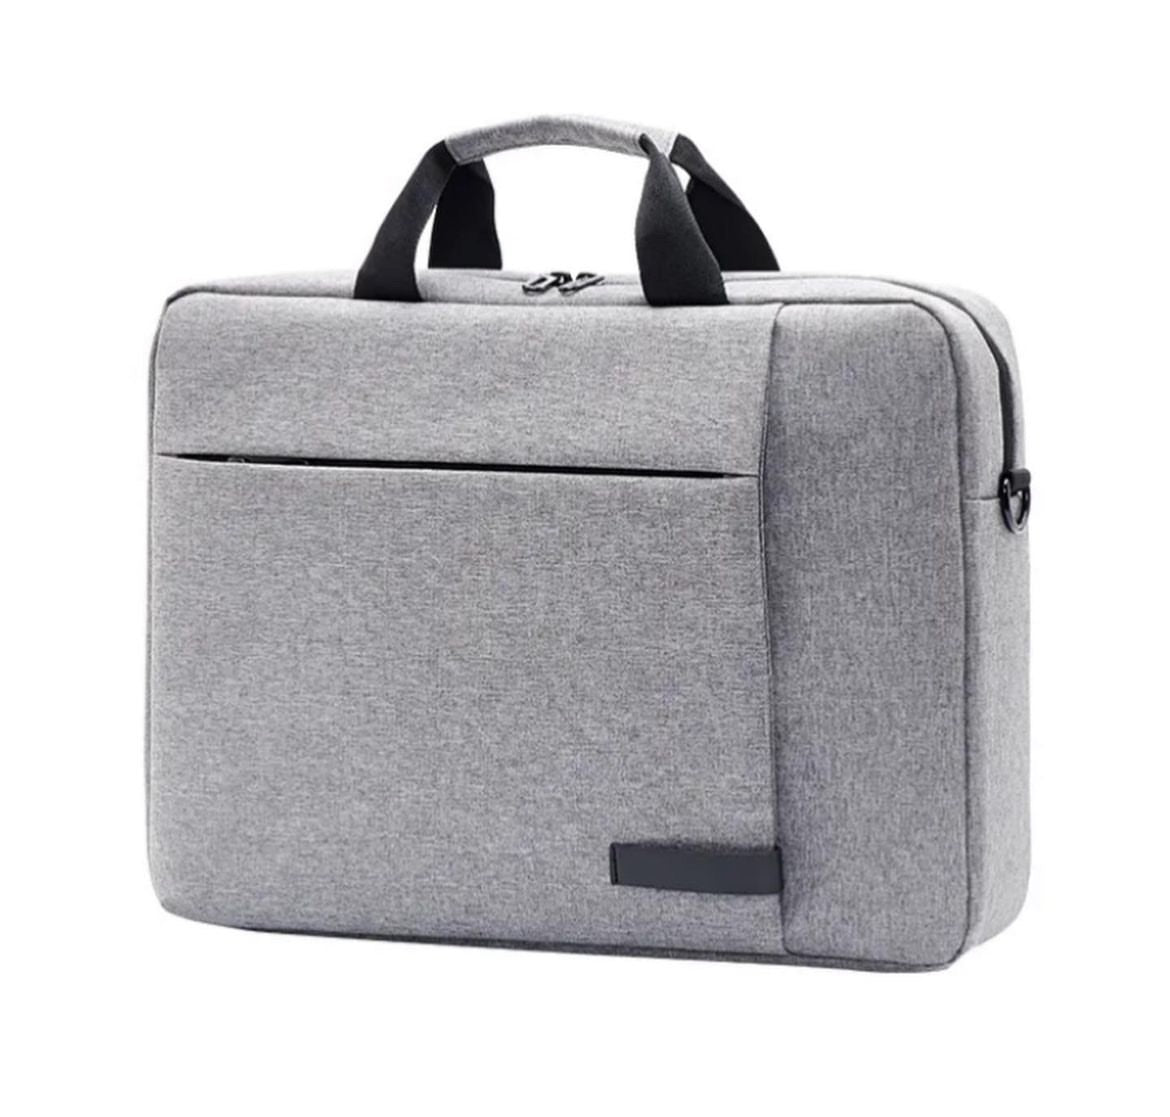 15inch laptop bag in grey